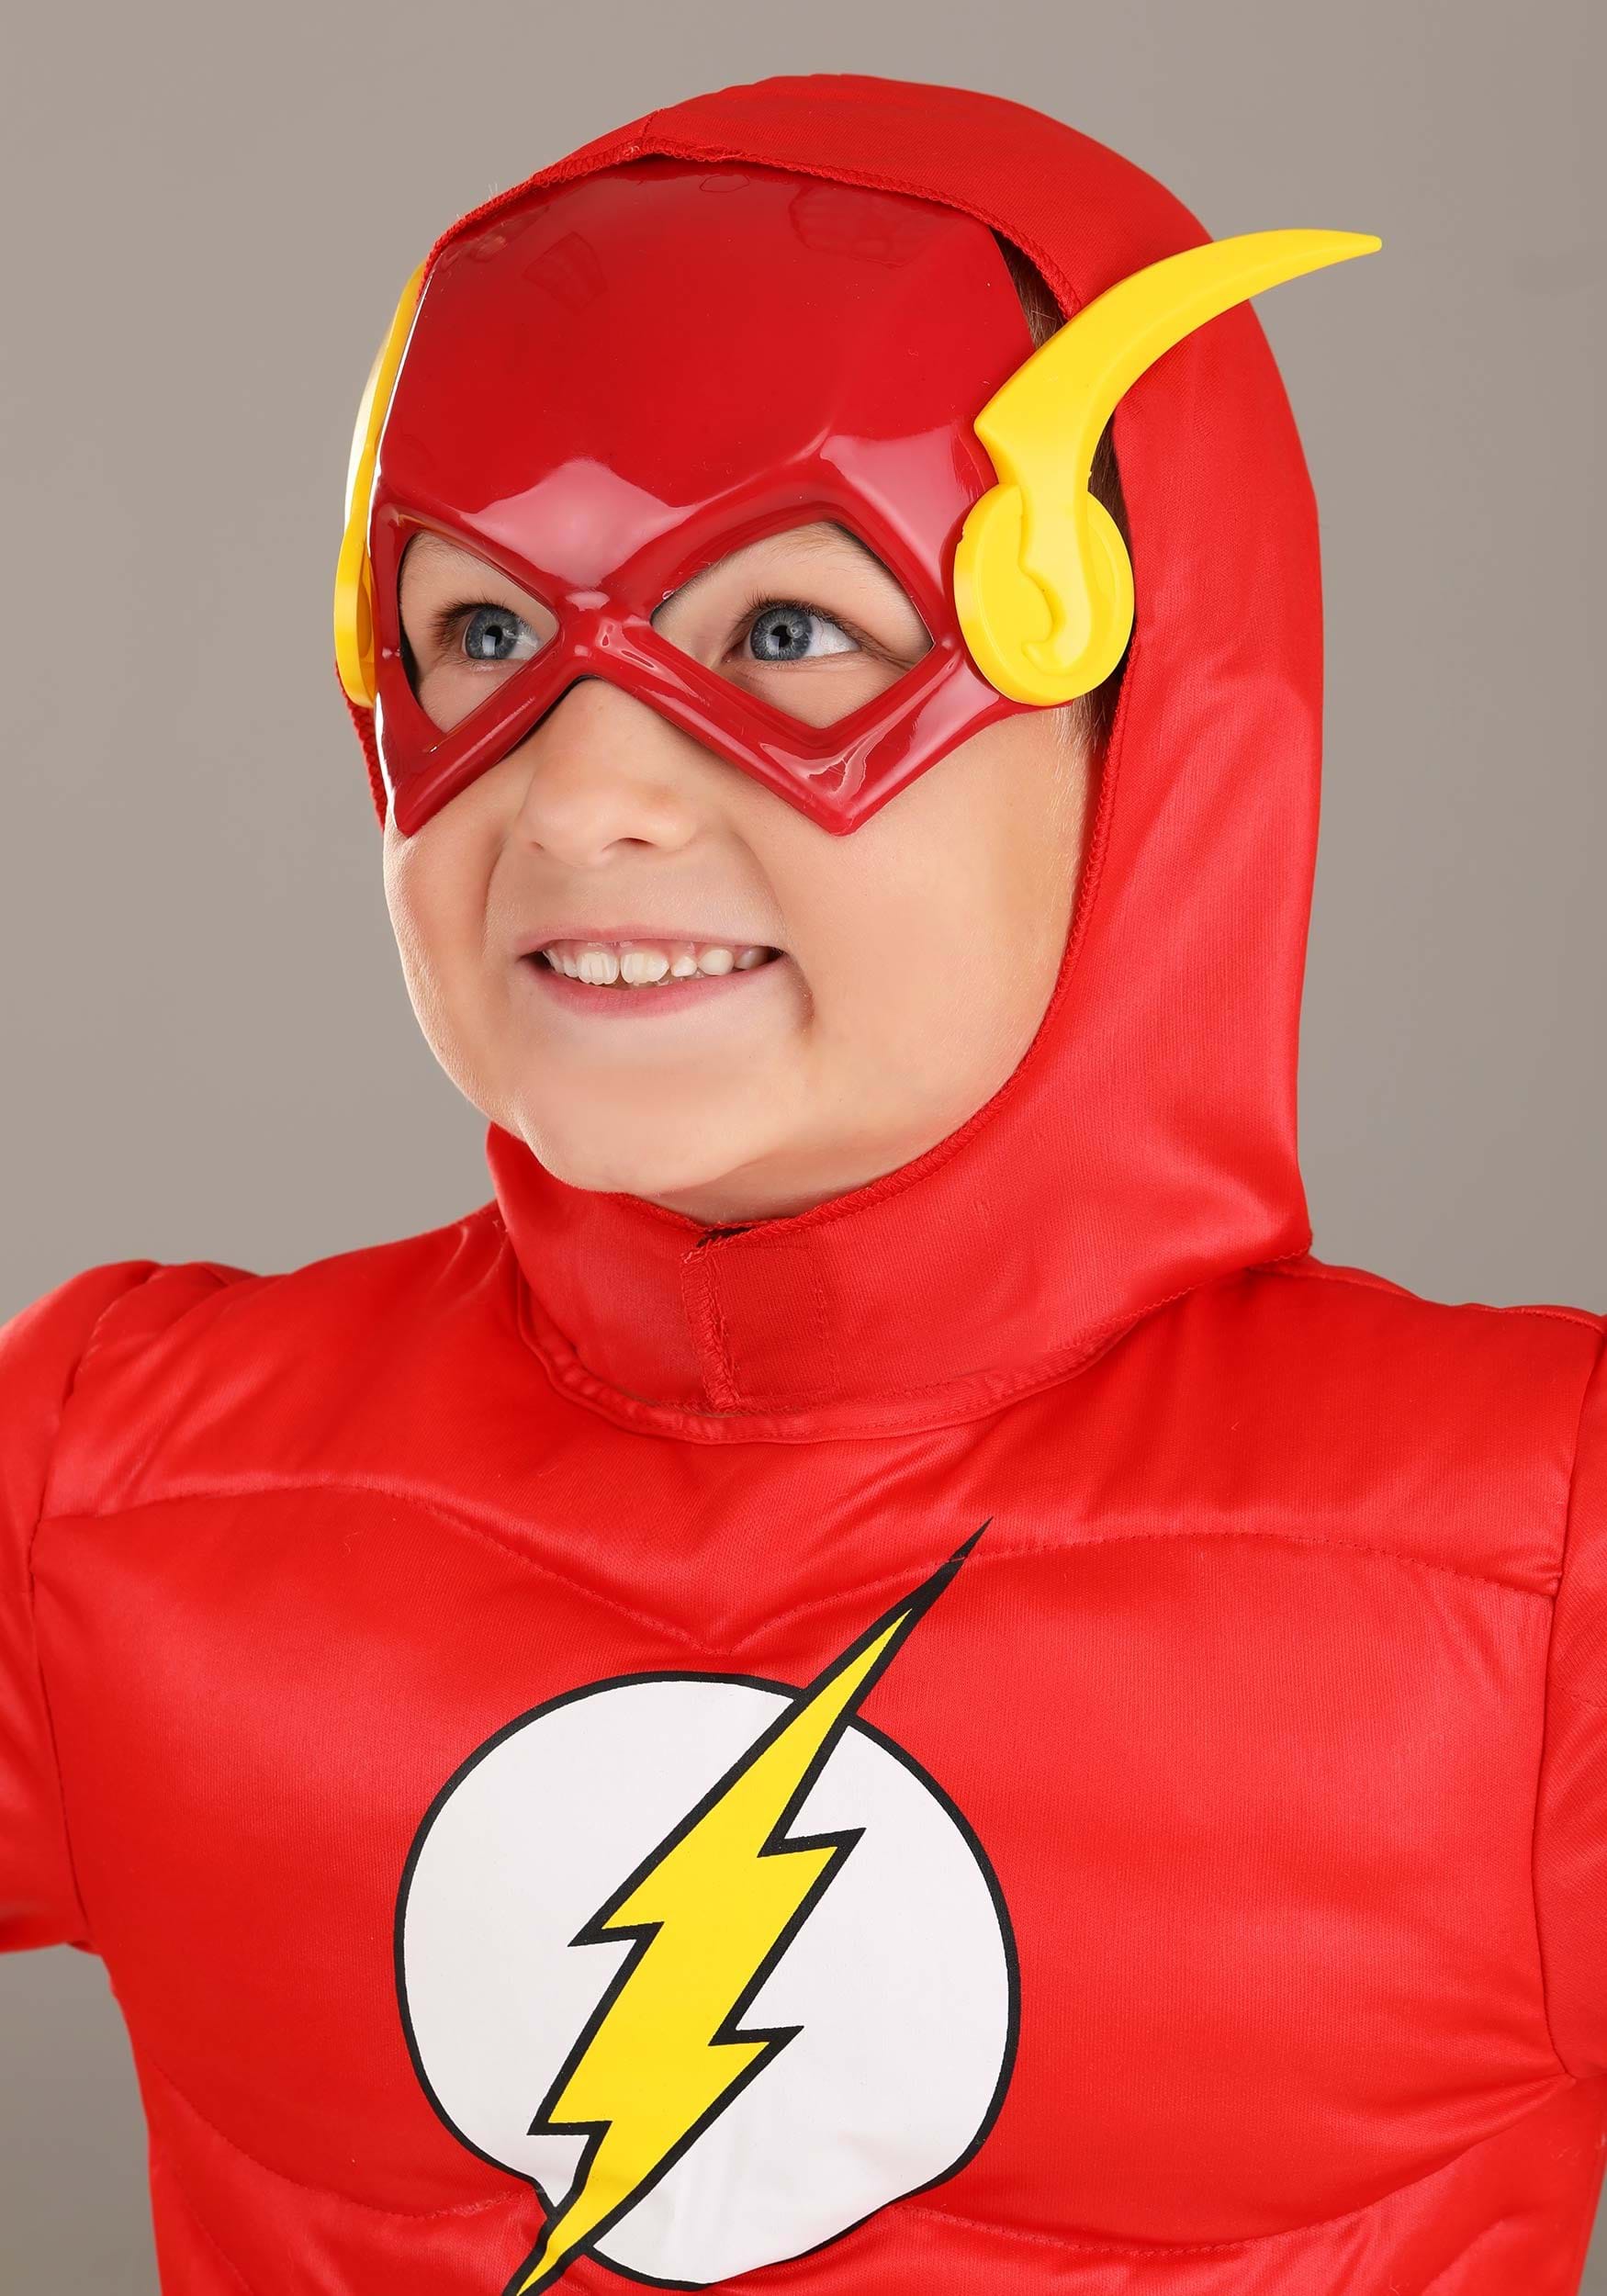 Kid's Flash Classic Deluxe Costume